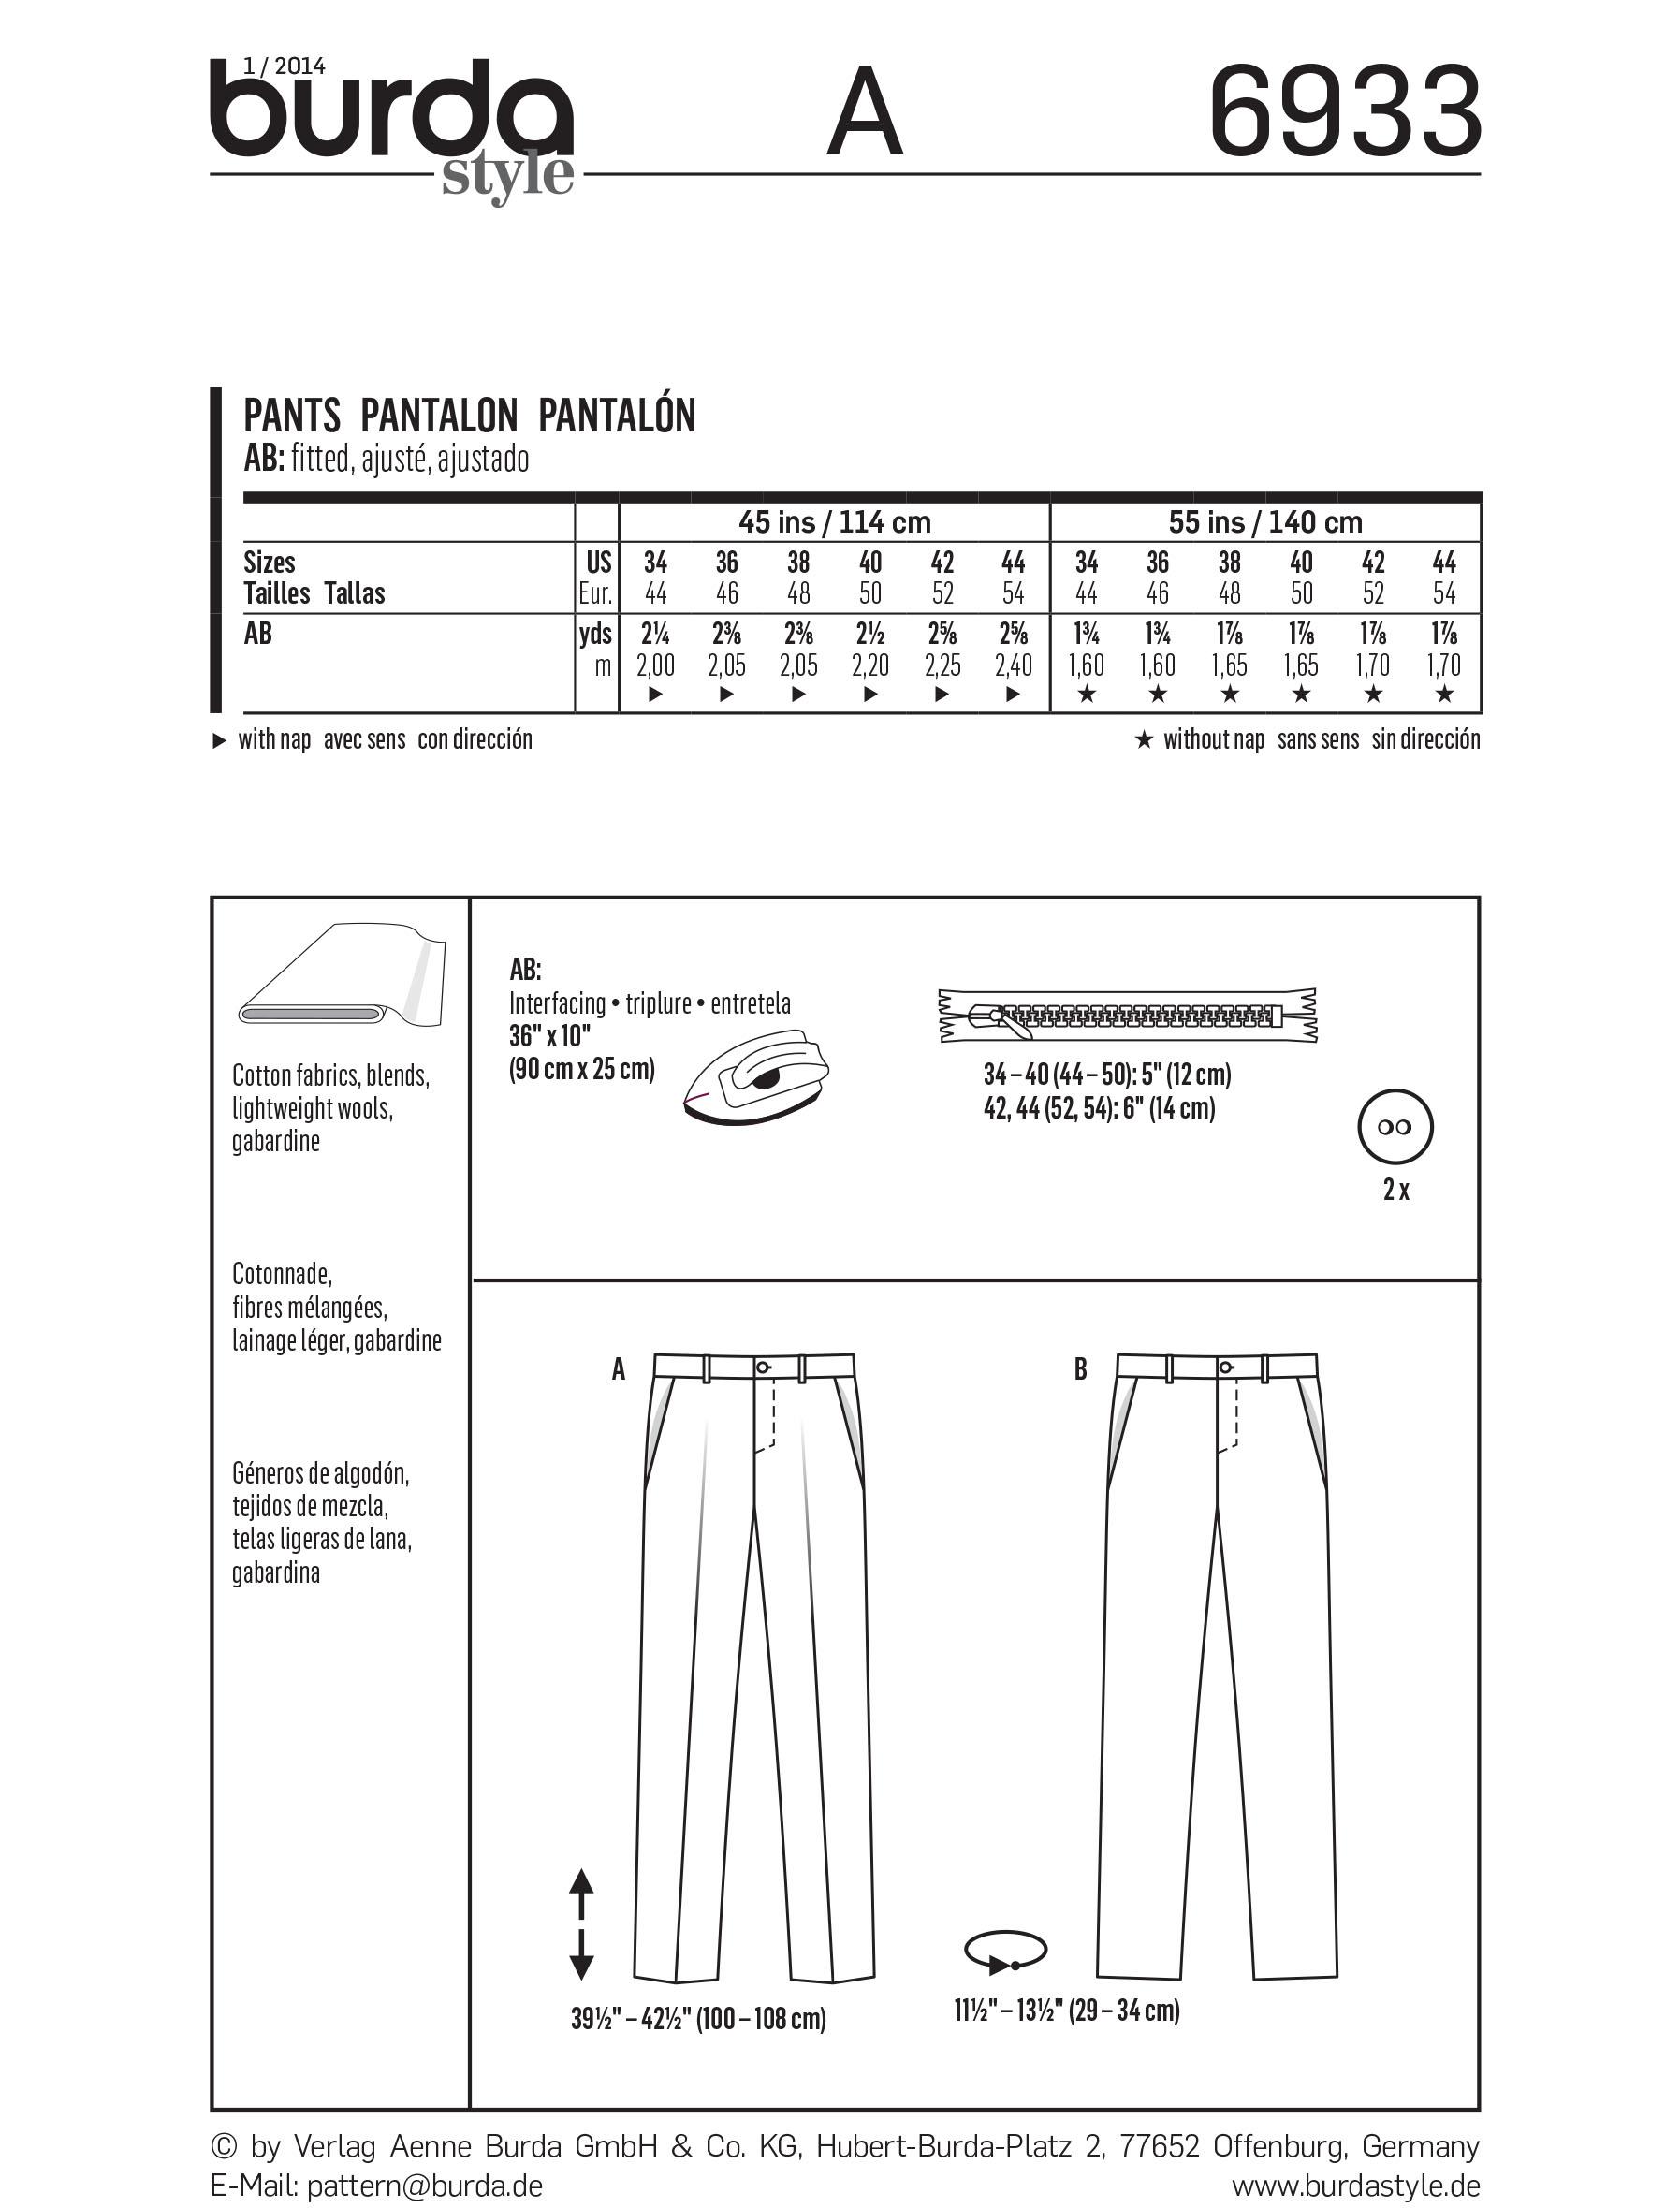 Burda B6933 Burda Menswear Sewing Pattern